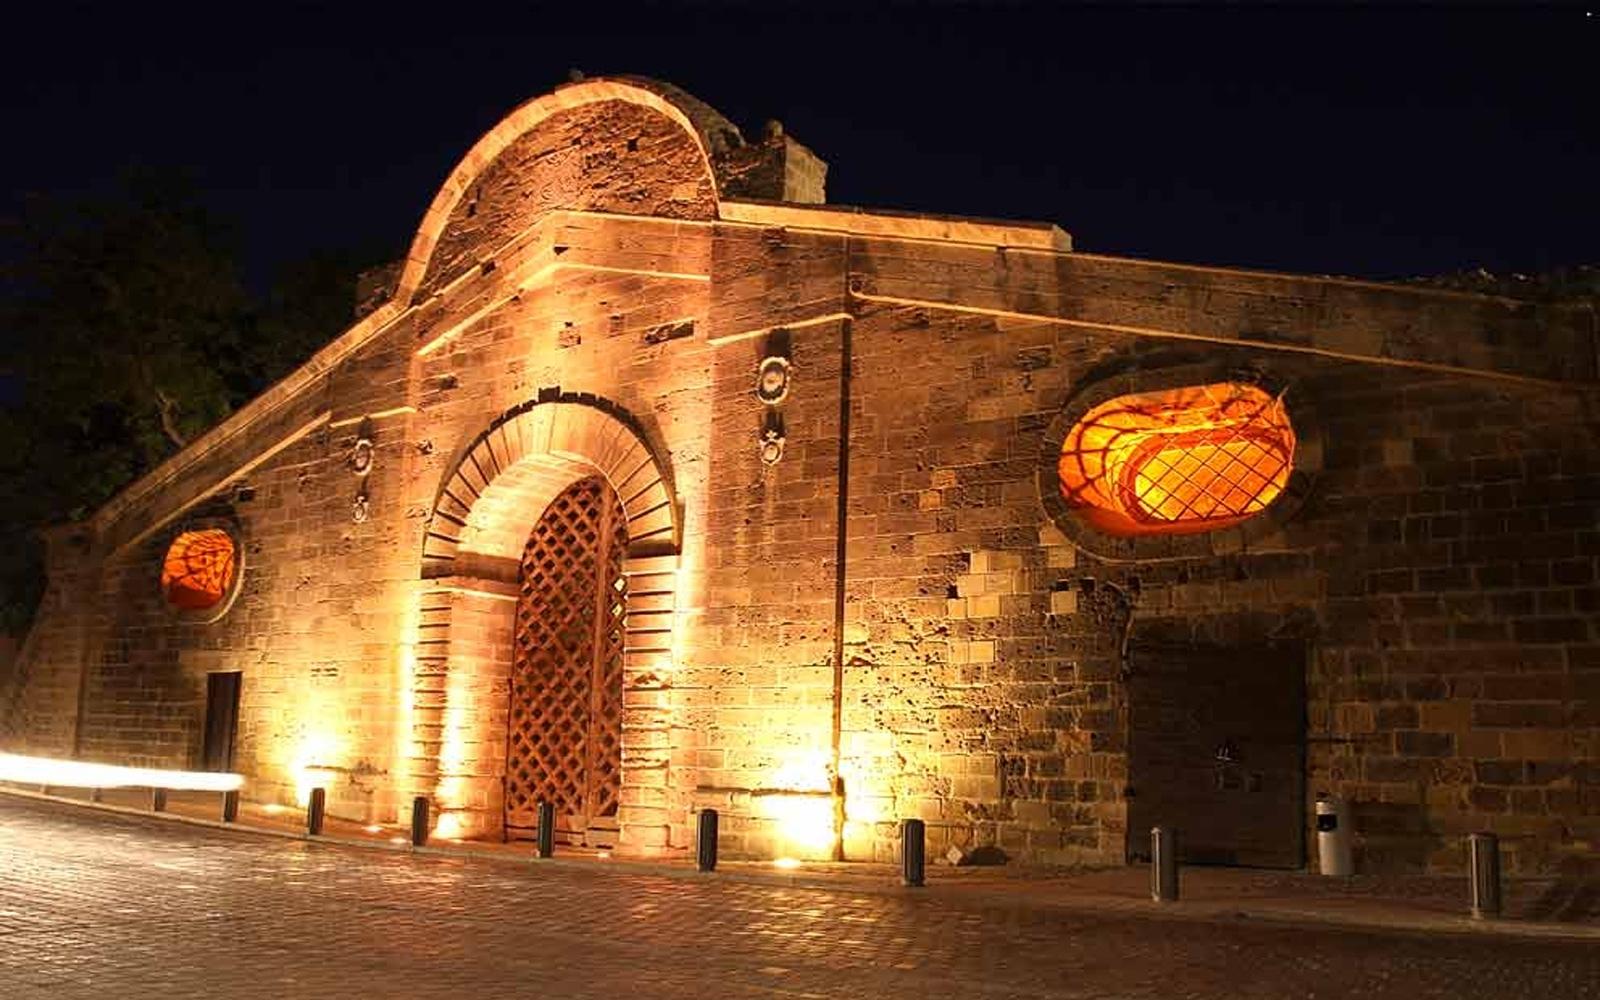 Famagusta Gate in Cyprus